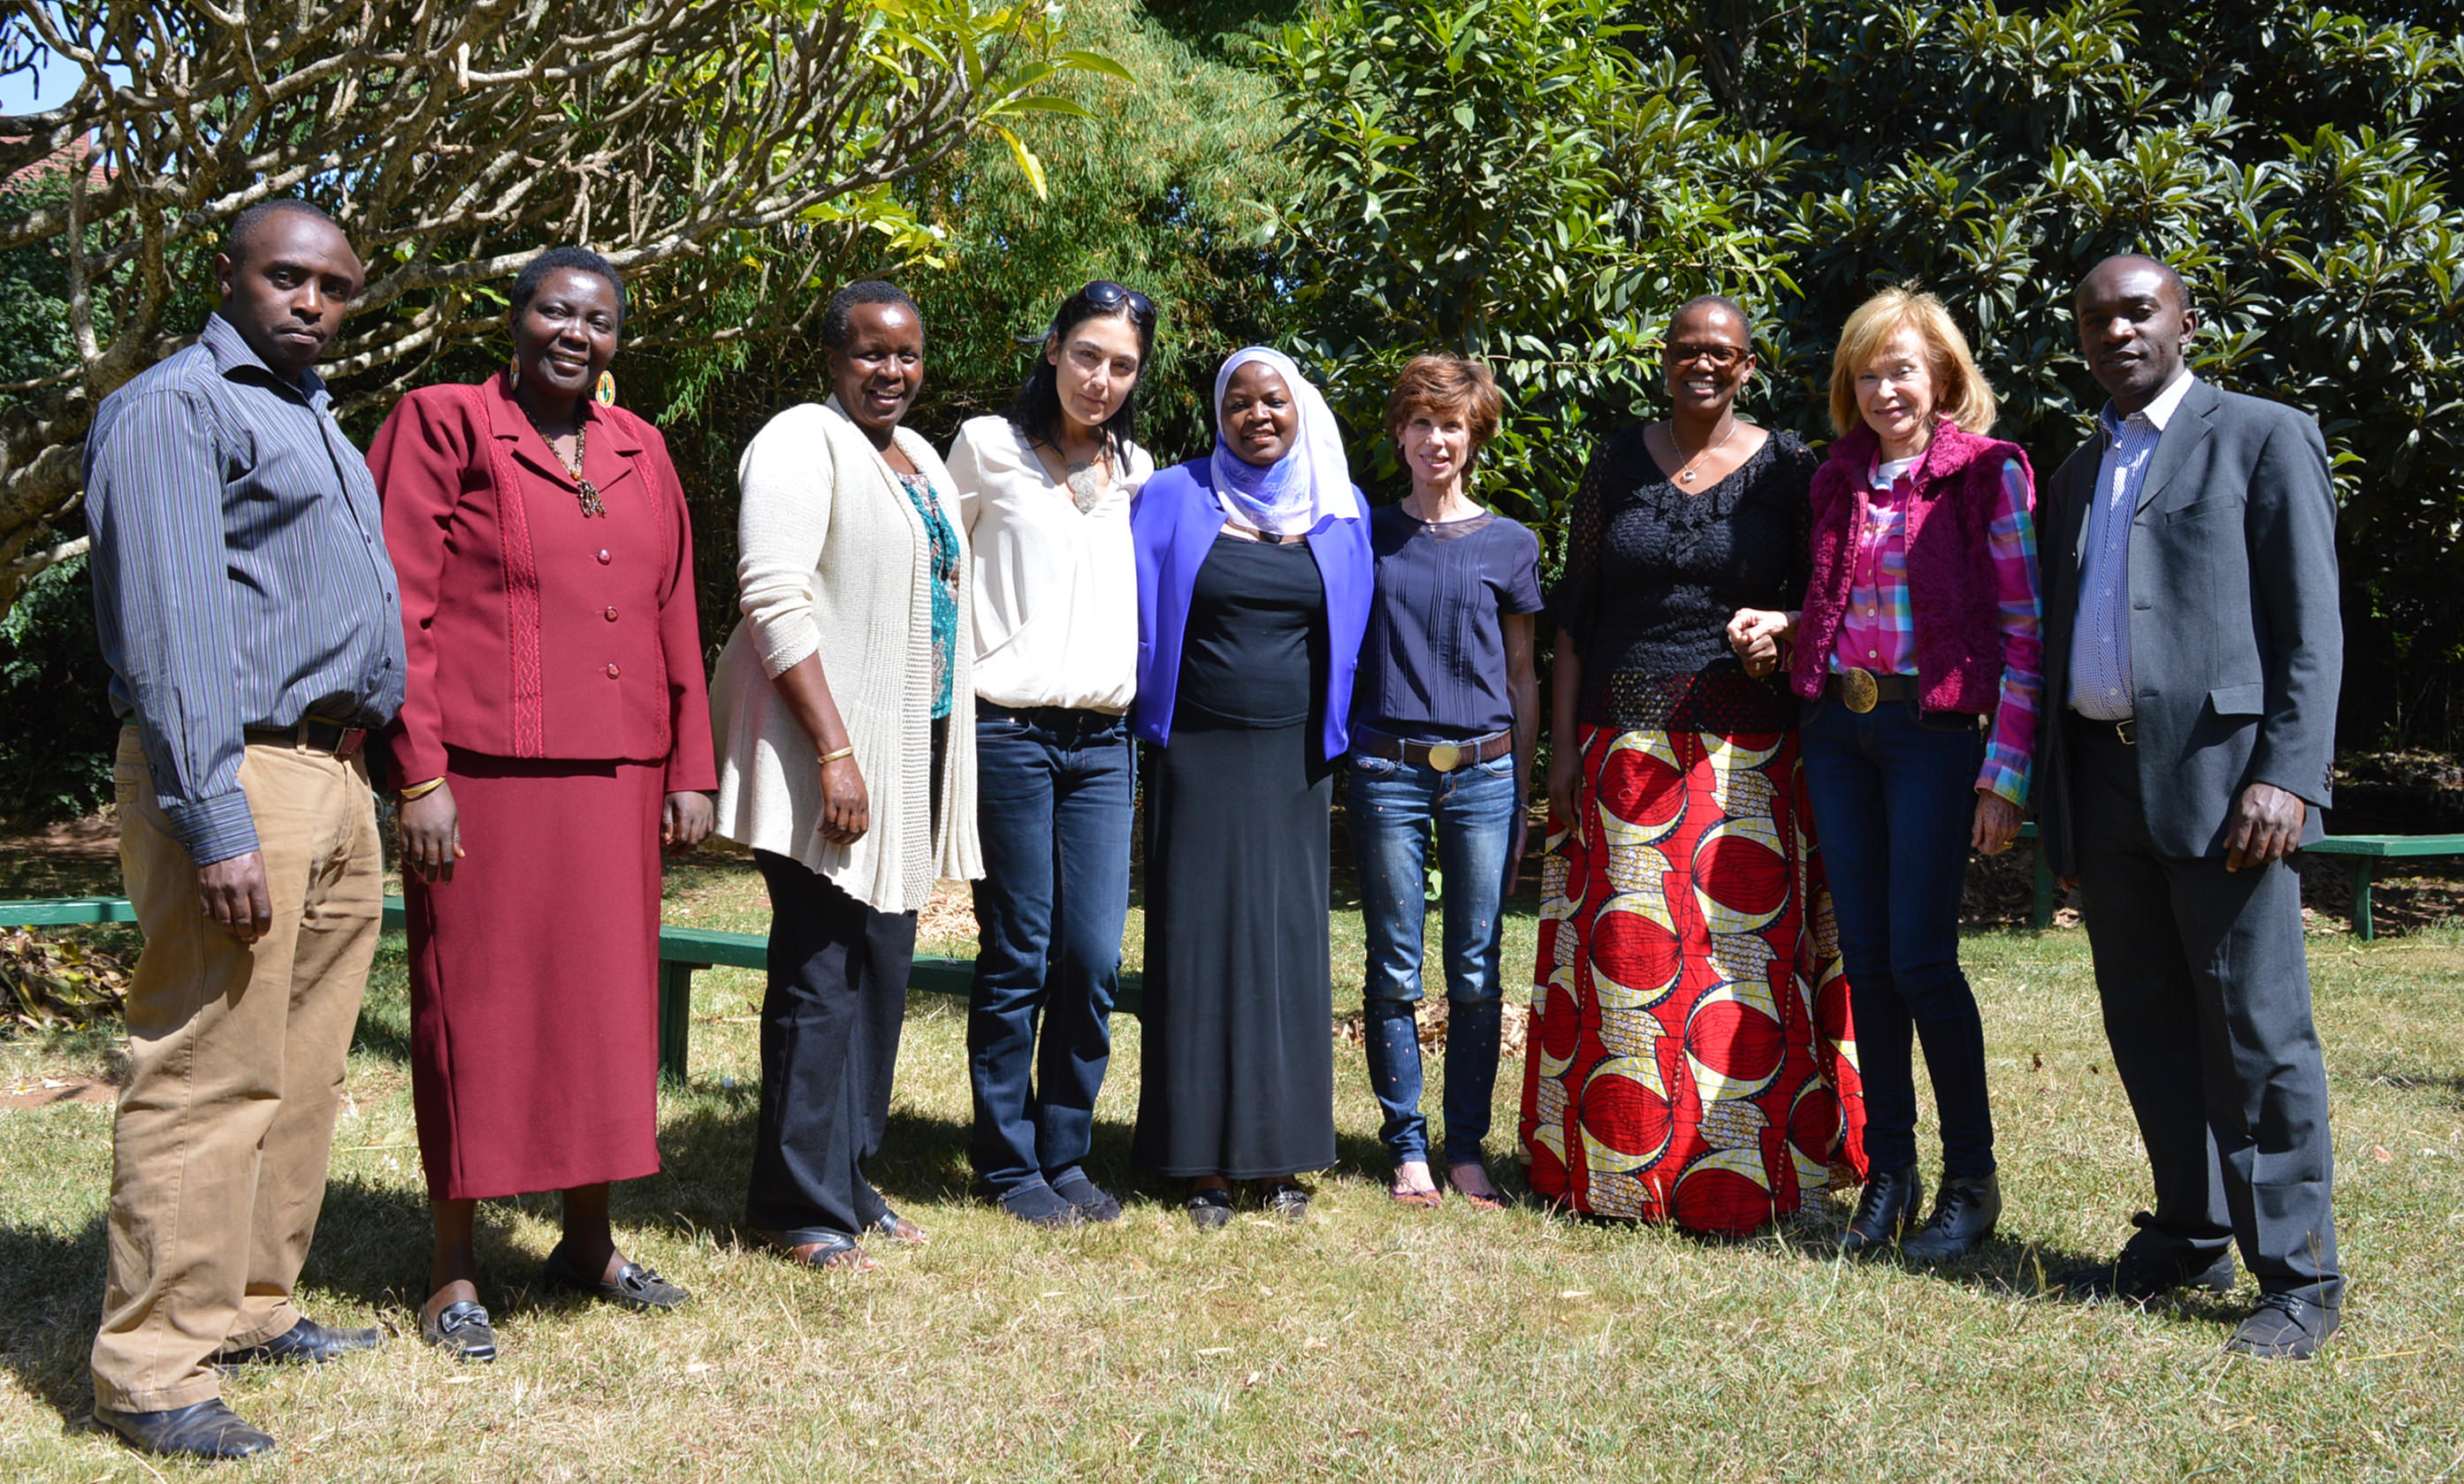 President De La Vega, her colleagues, Wanjira Mathai, Chair of GBM’s Board, Aisha Karanja, Executive Director GBM and GBM staff pose for a photo